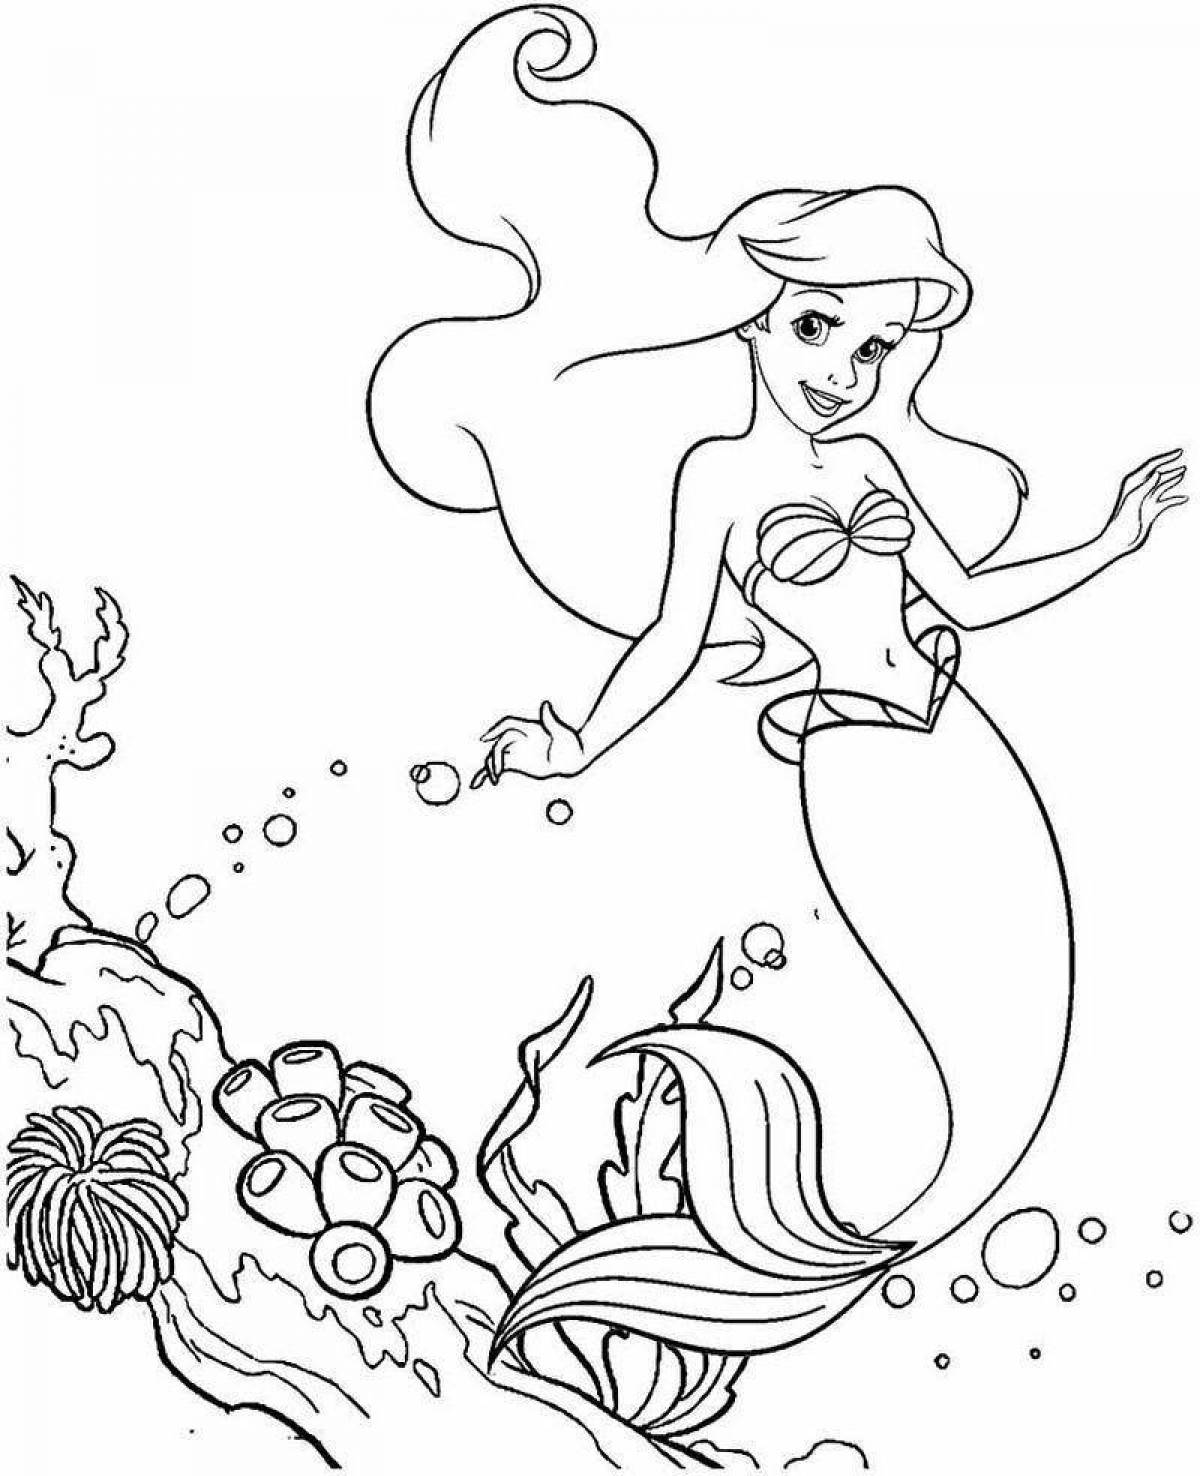 Playful mermaid coloring by numbers